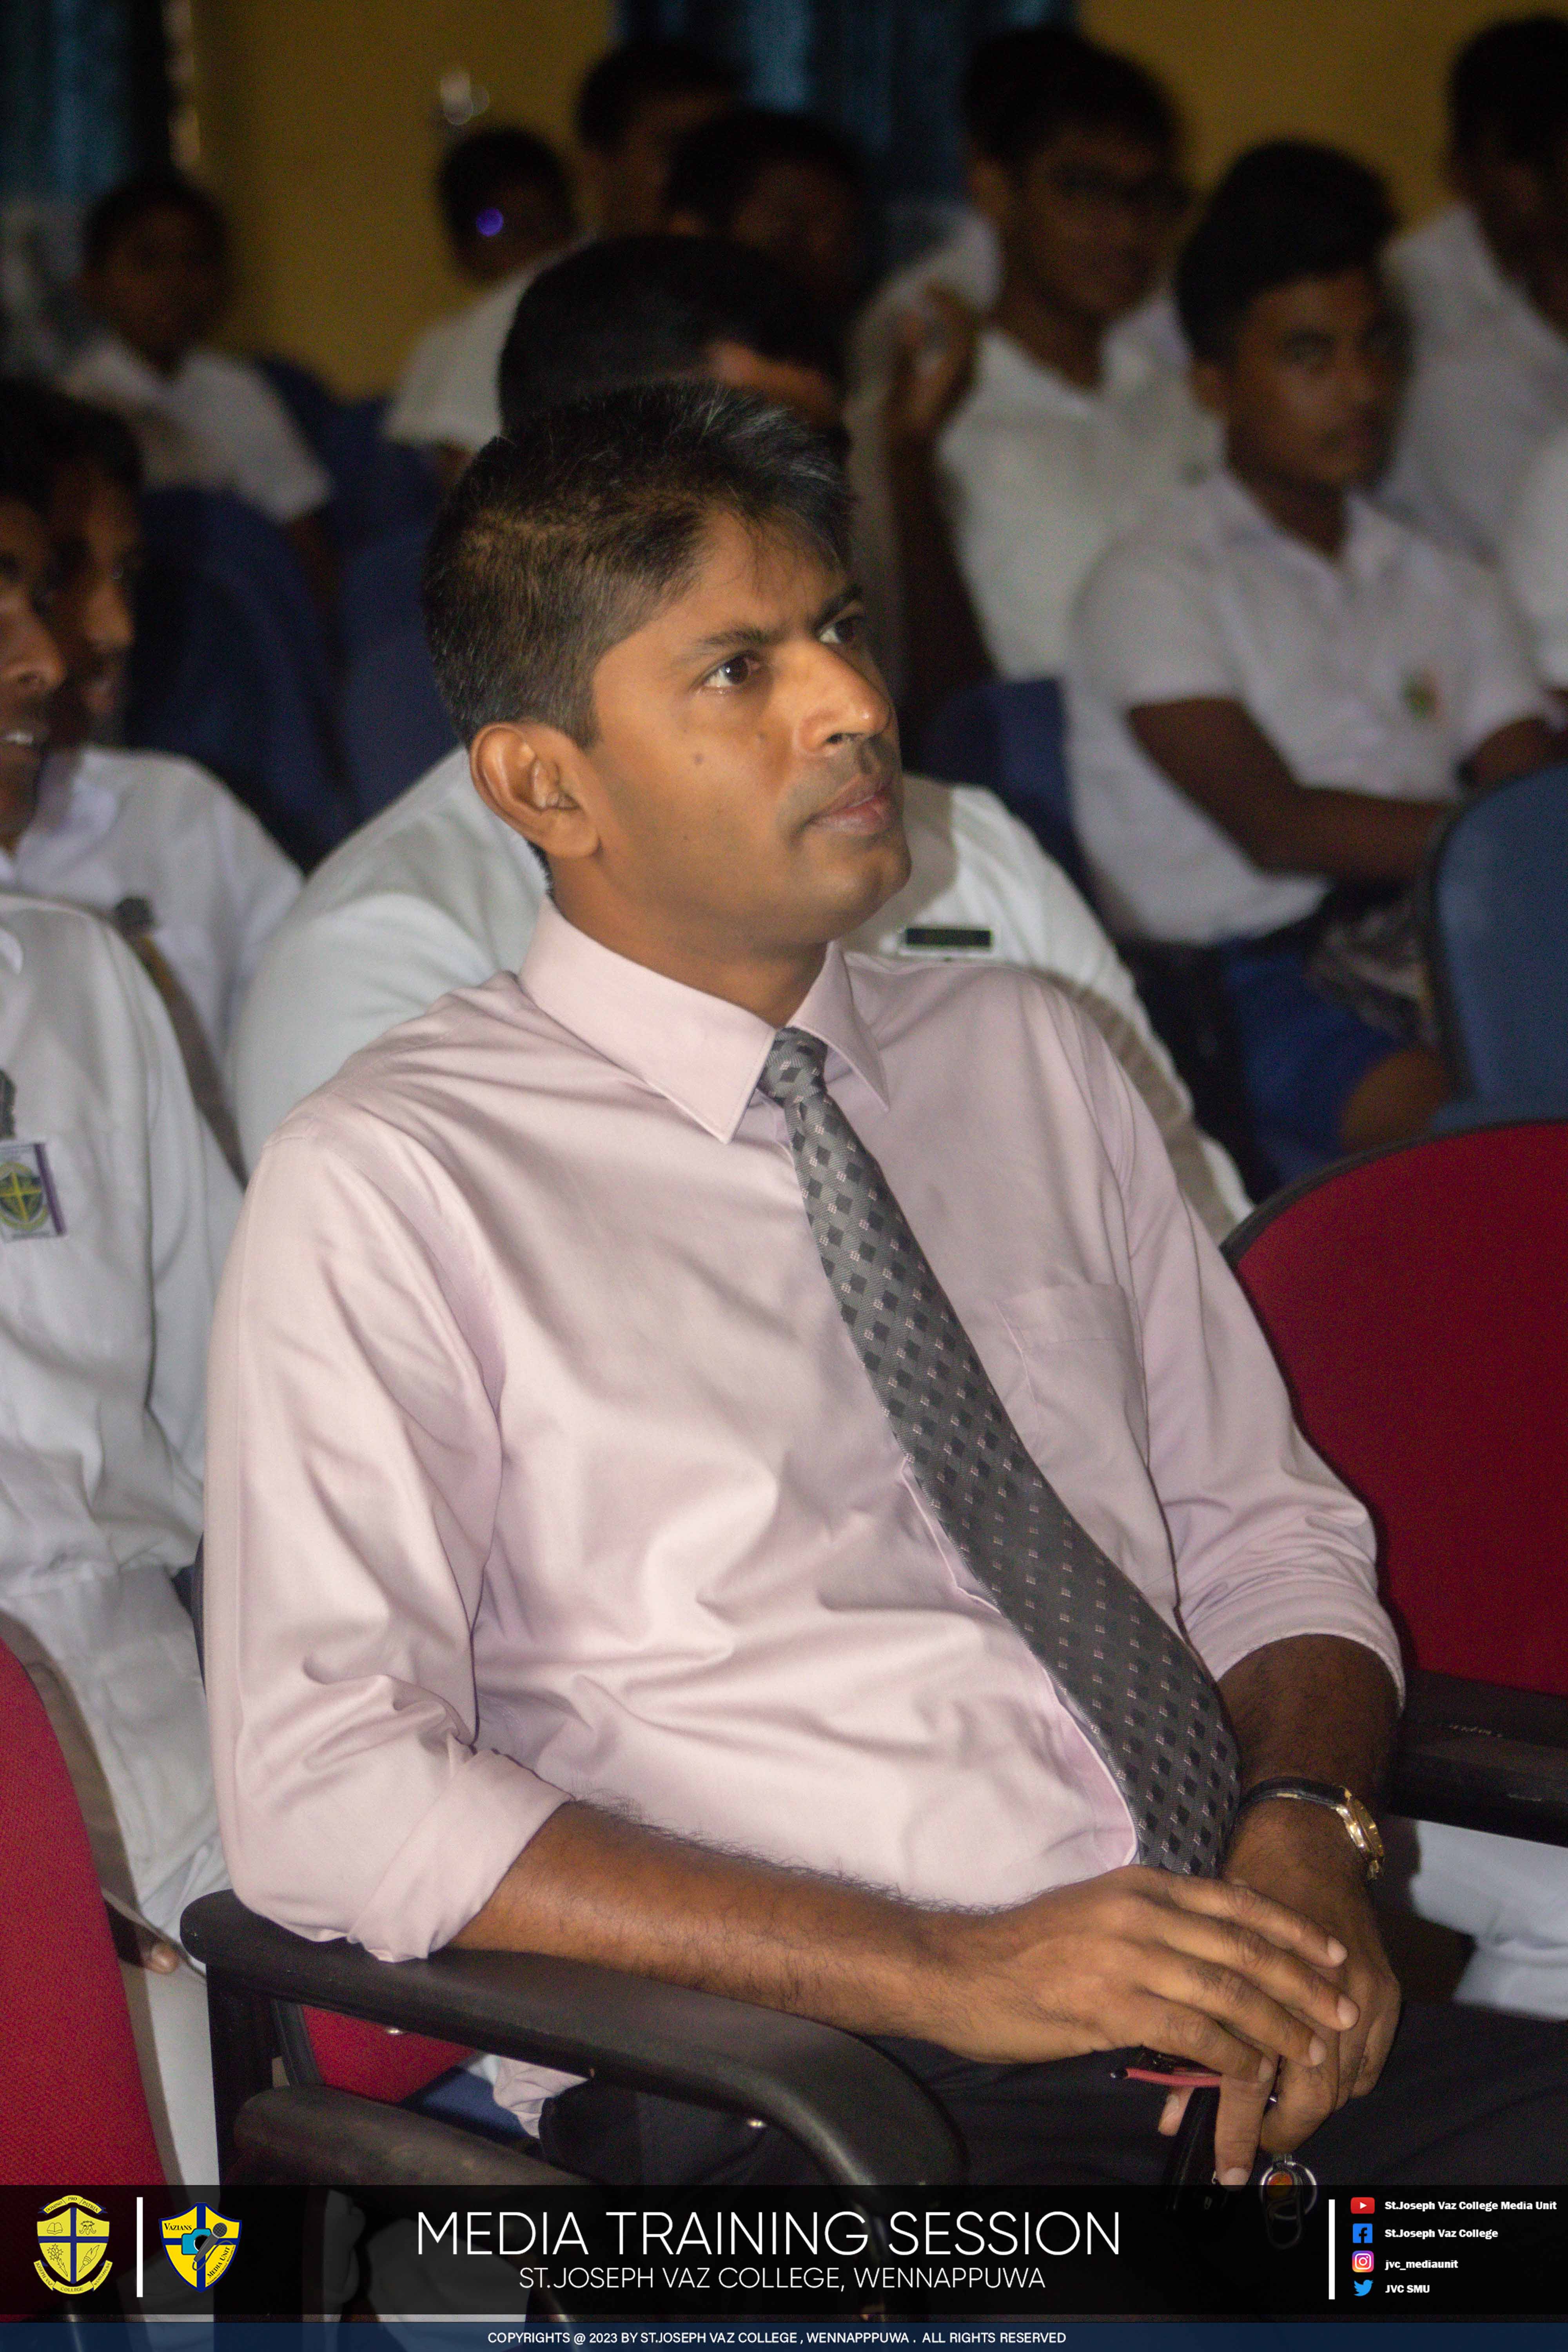 Media Training Session - St. Joseph Vaz College - Wennappuwa - Sri Lanka